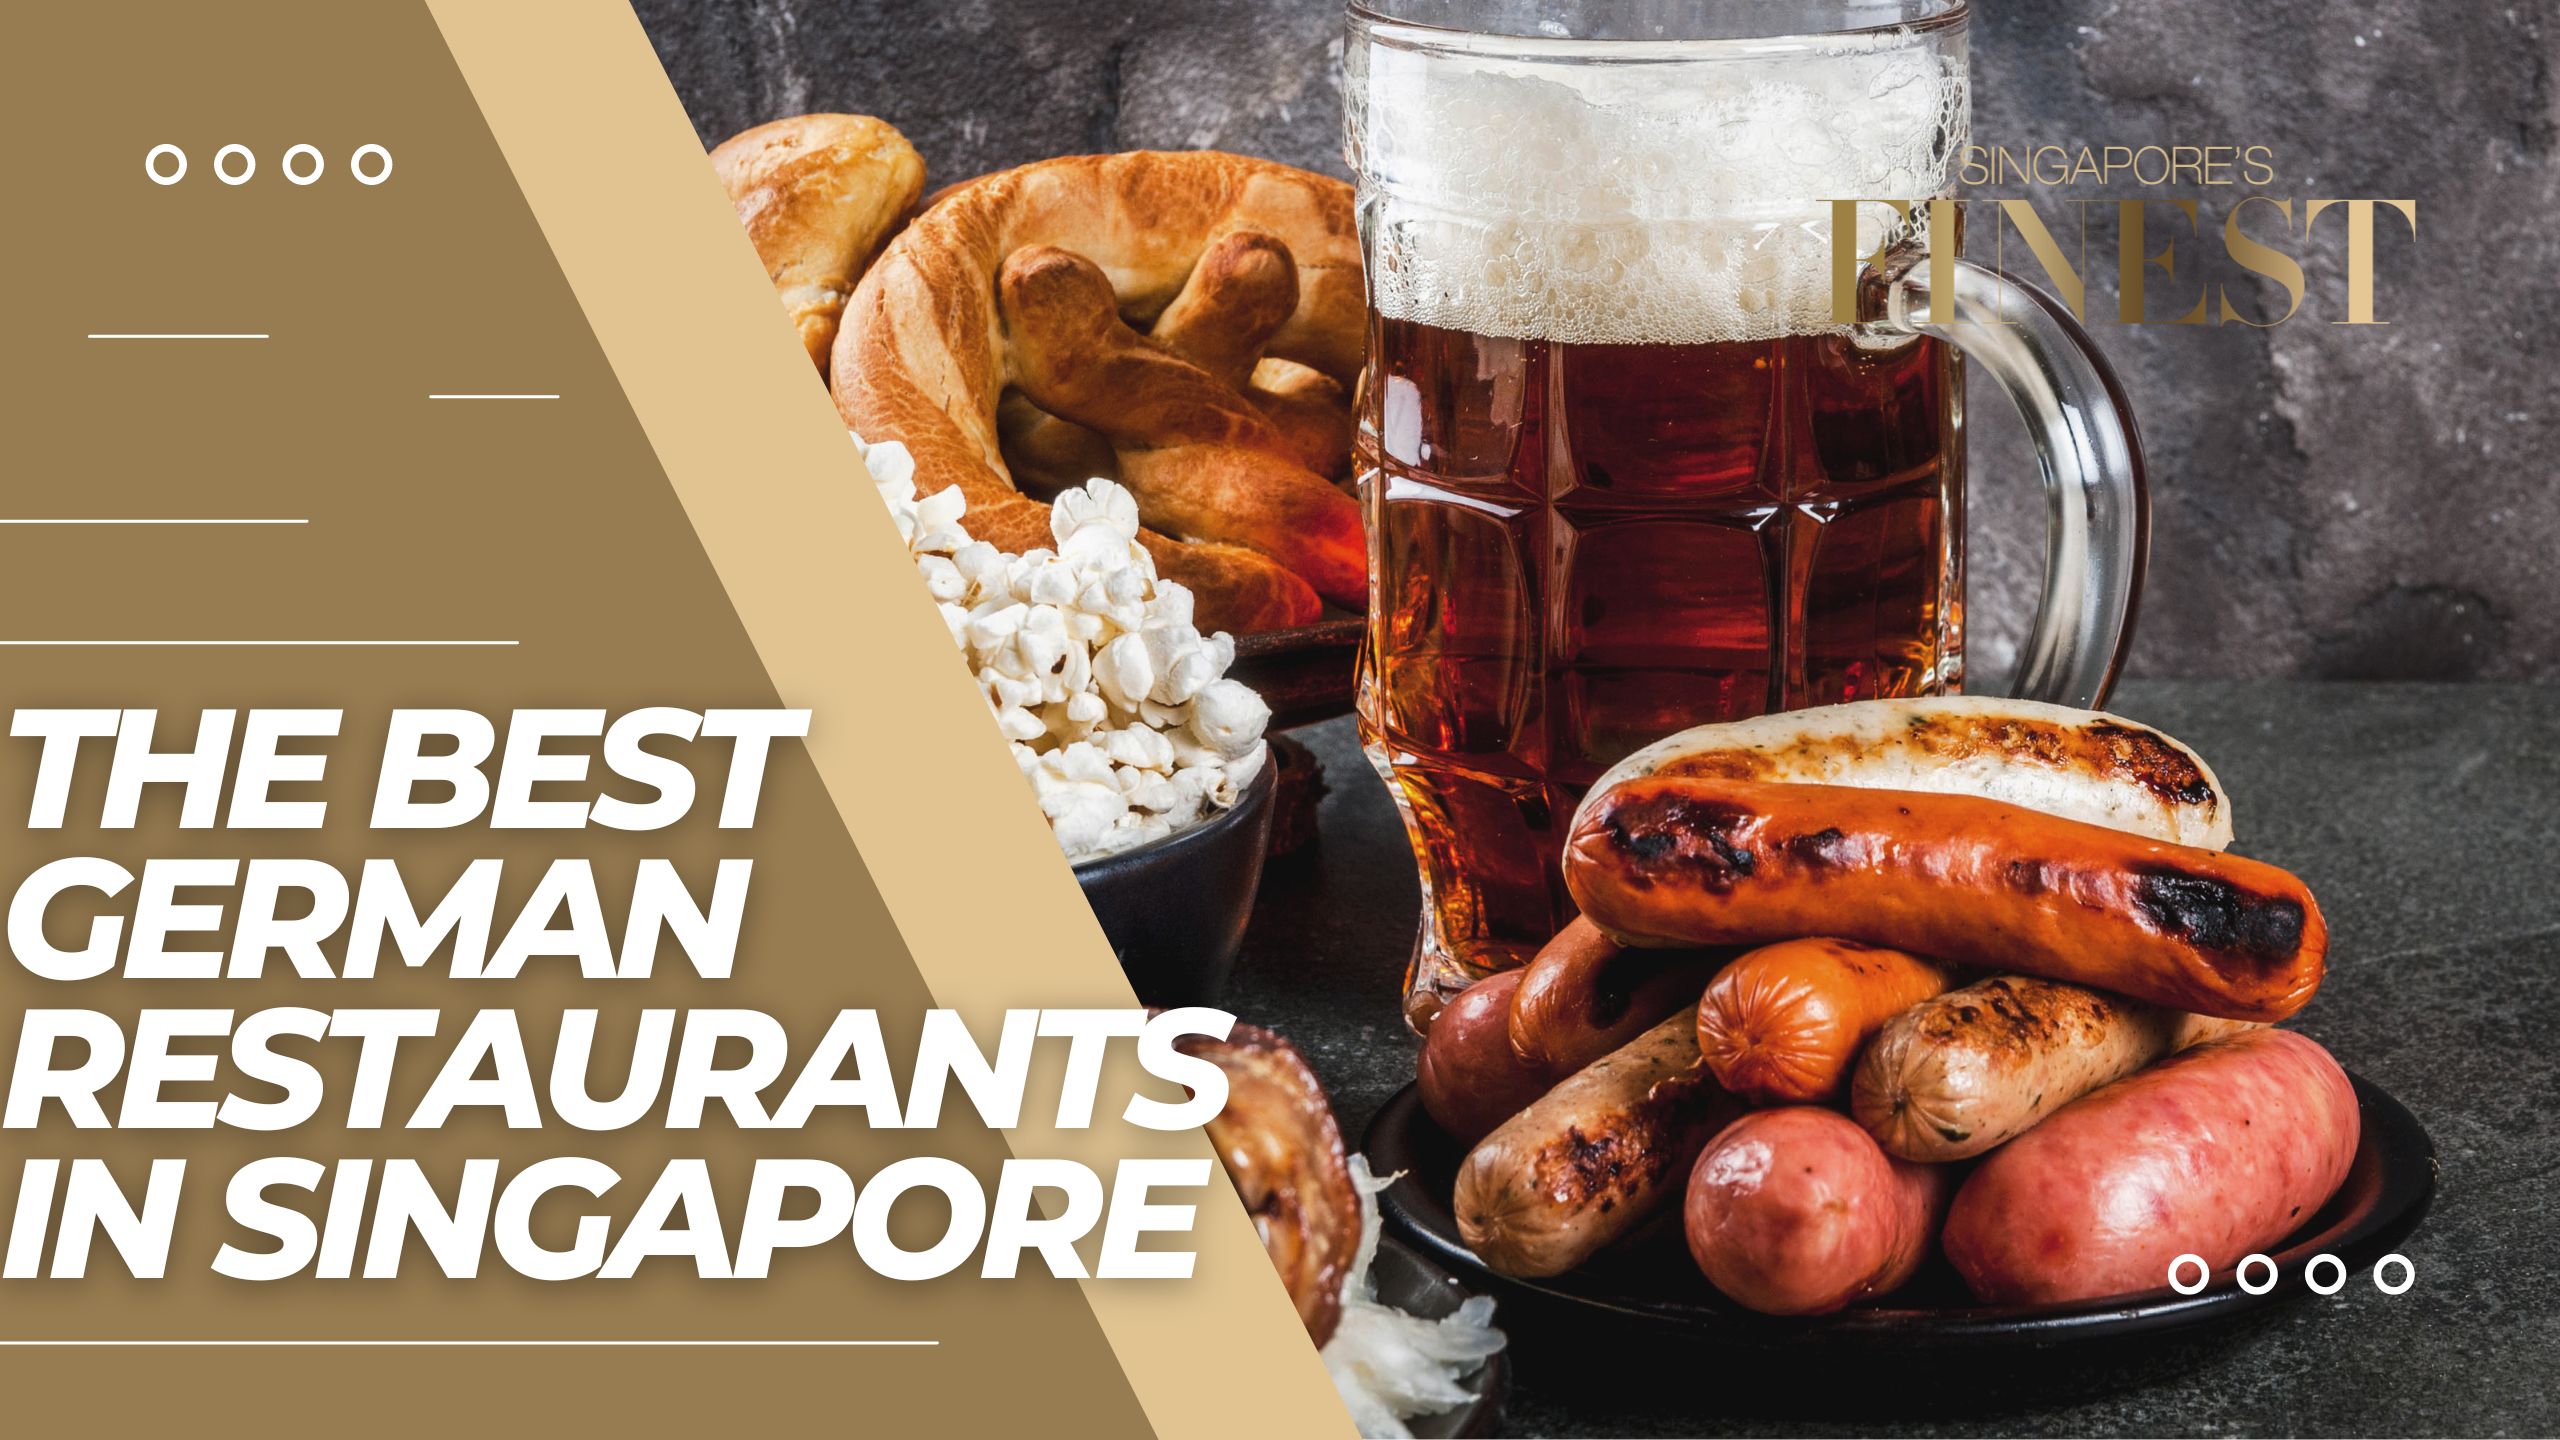 The Finest German Restaurants in Singapore